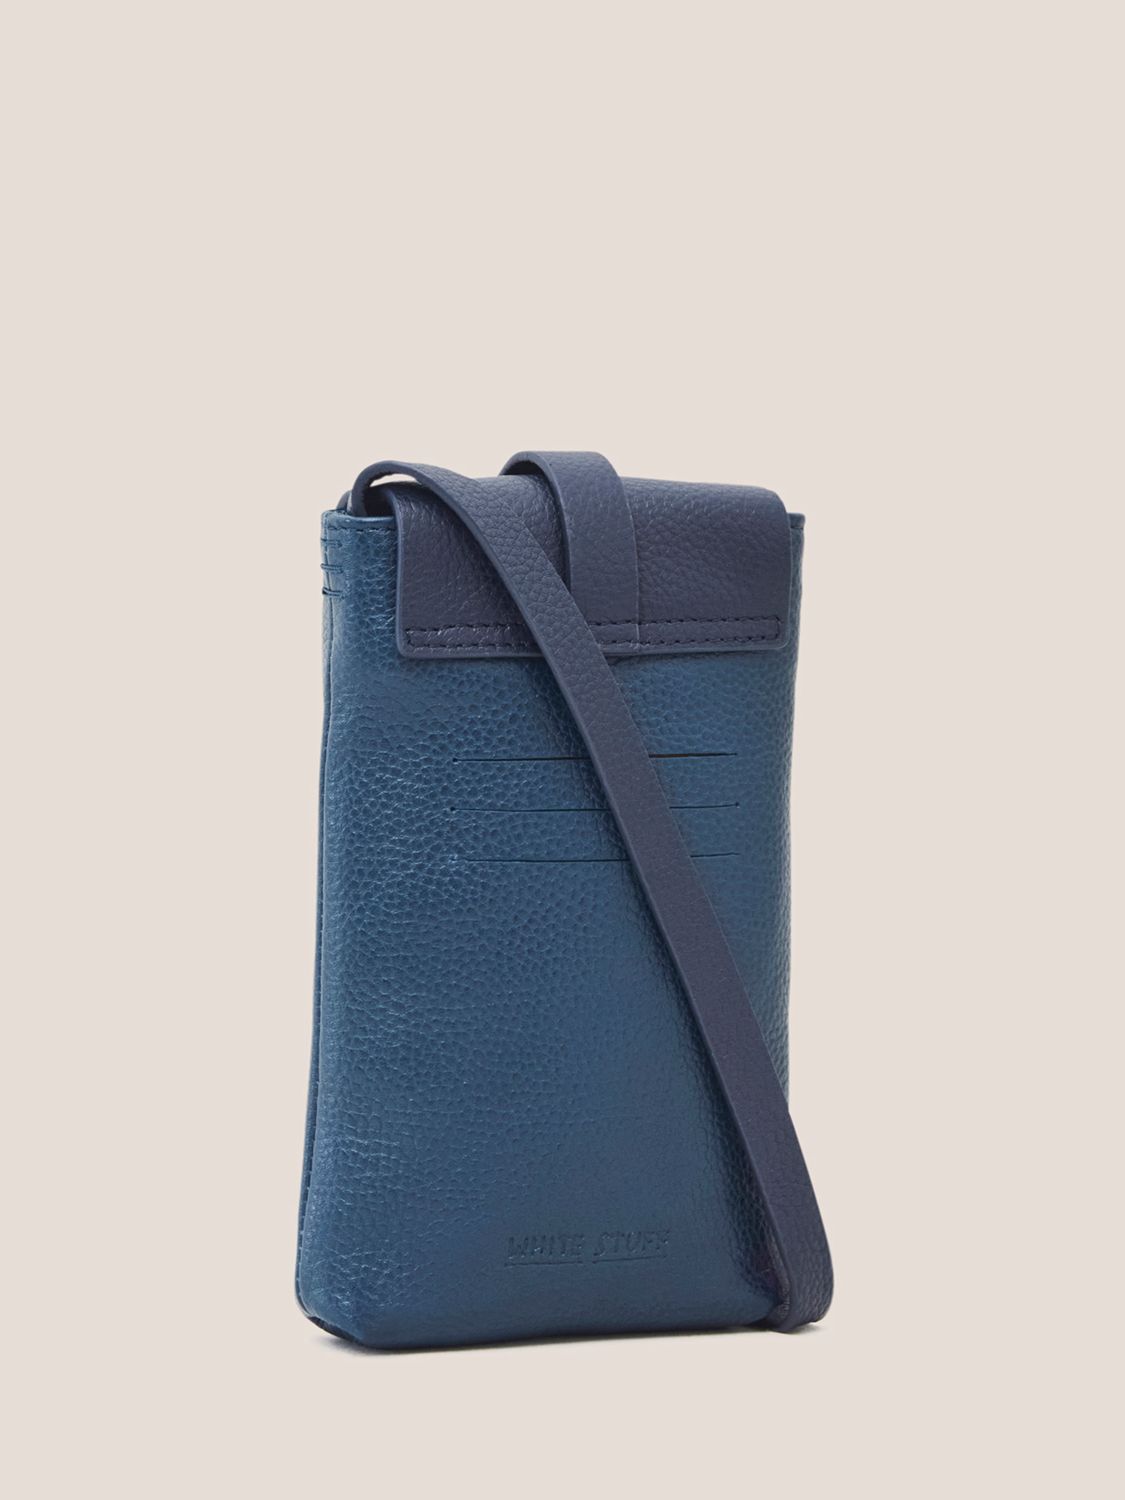 Giorgio Armani Crossbody Bag / Navy Blue / Velvet / Never Used